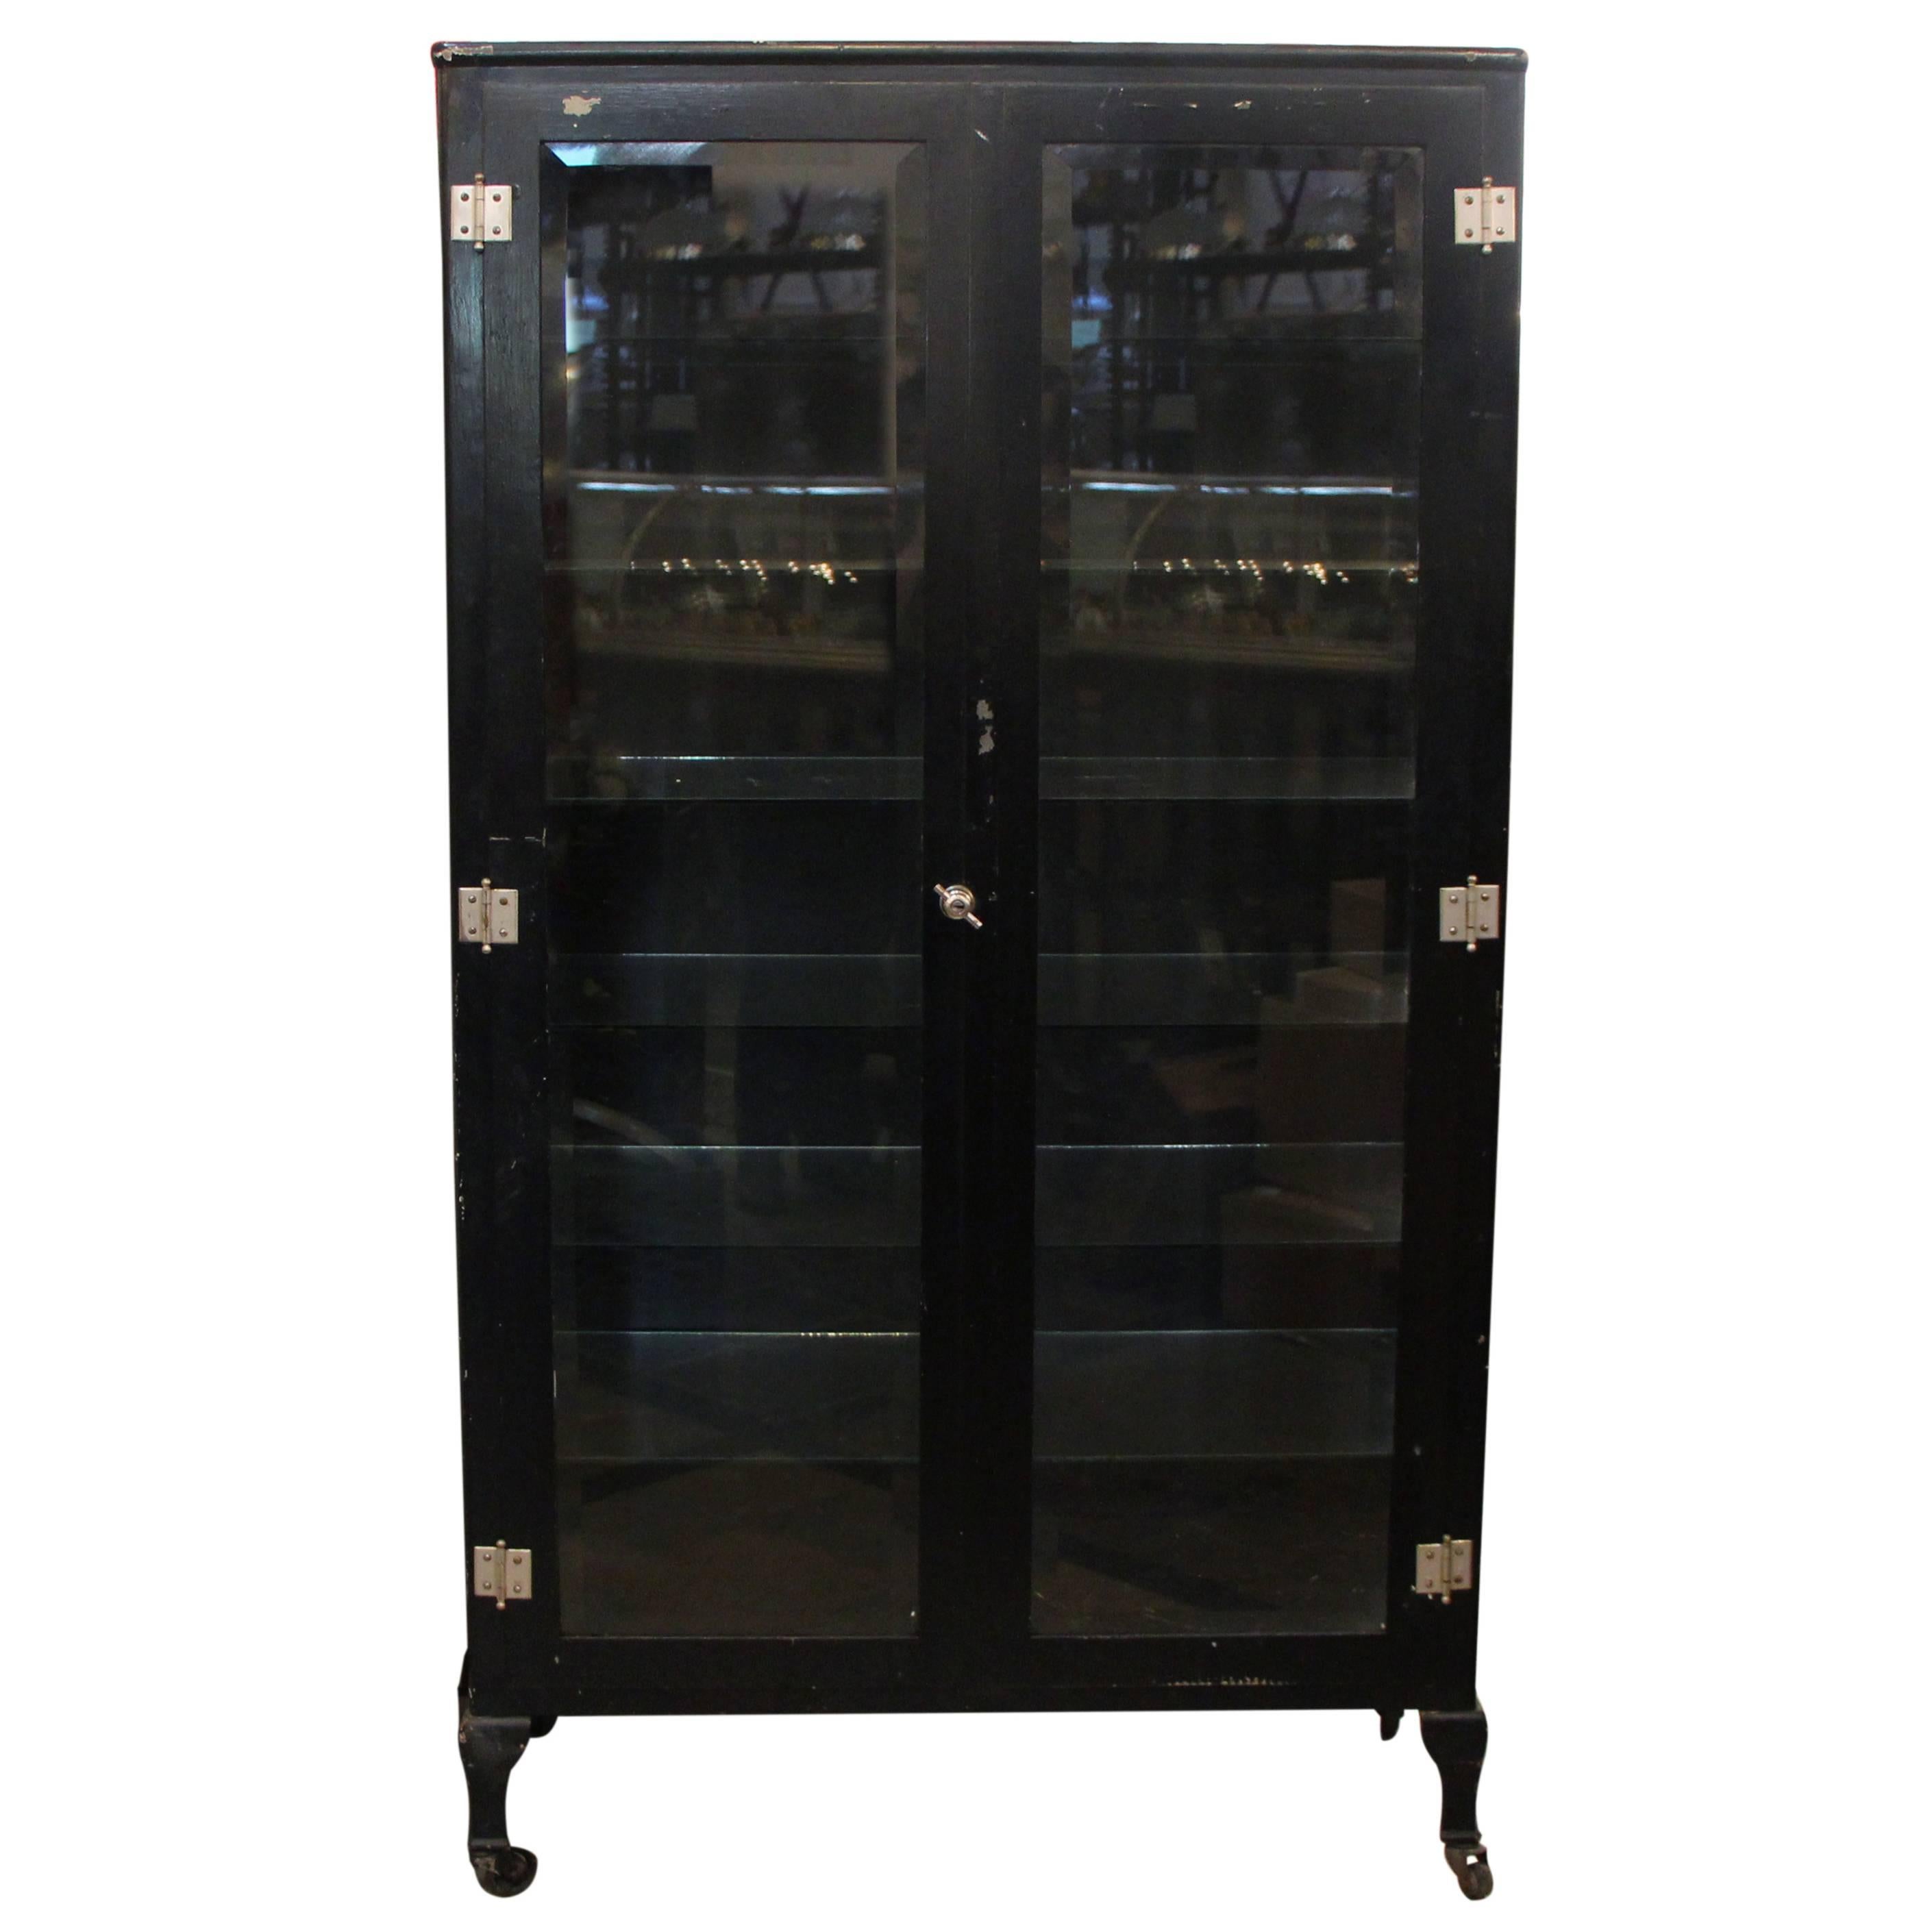 1920s Vintage Black Medical Cabinet with Glass Shelves and Beveled Glass Doors